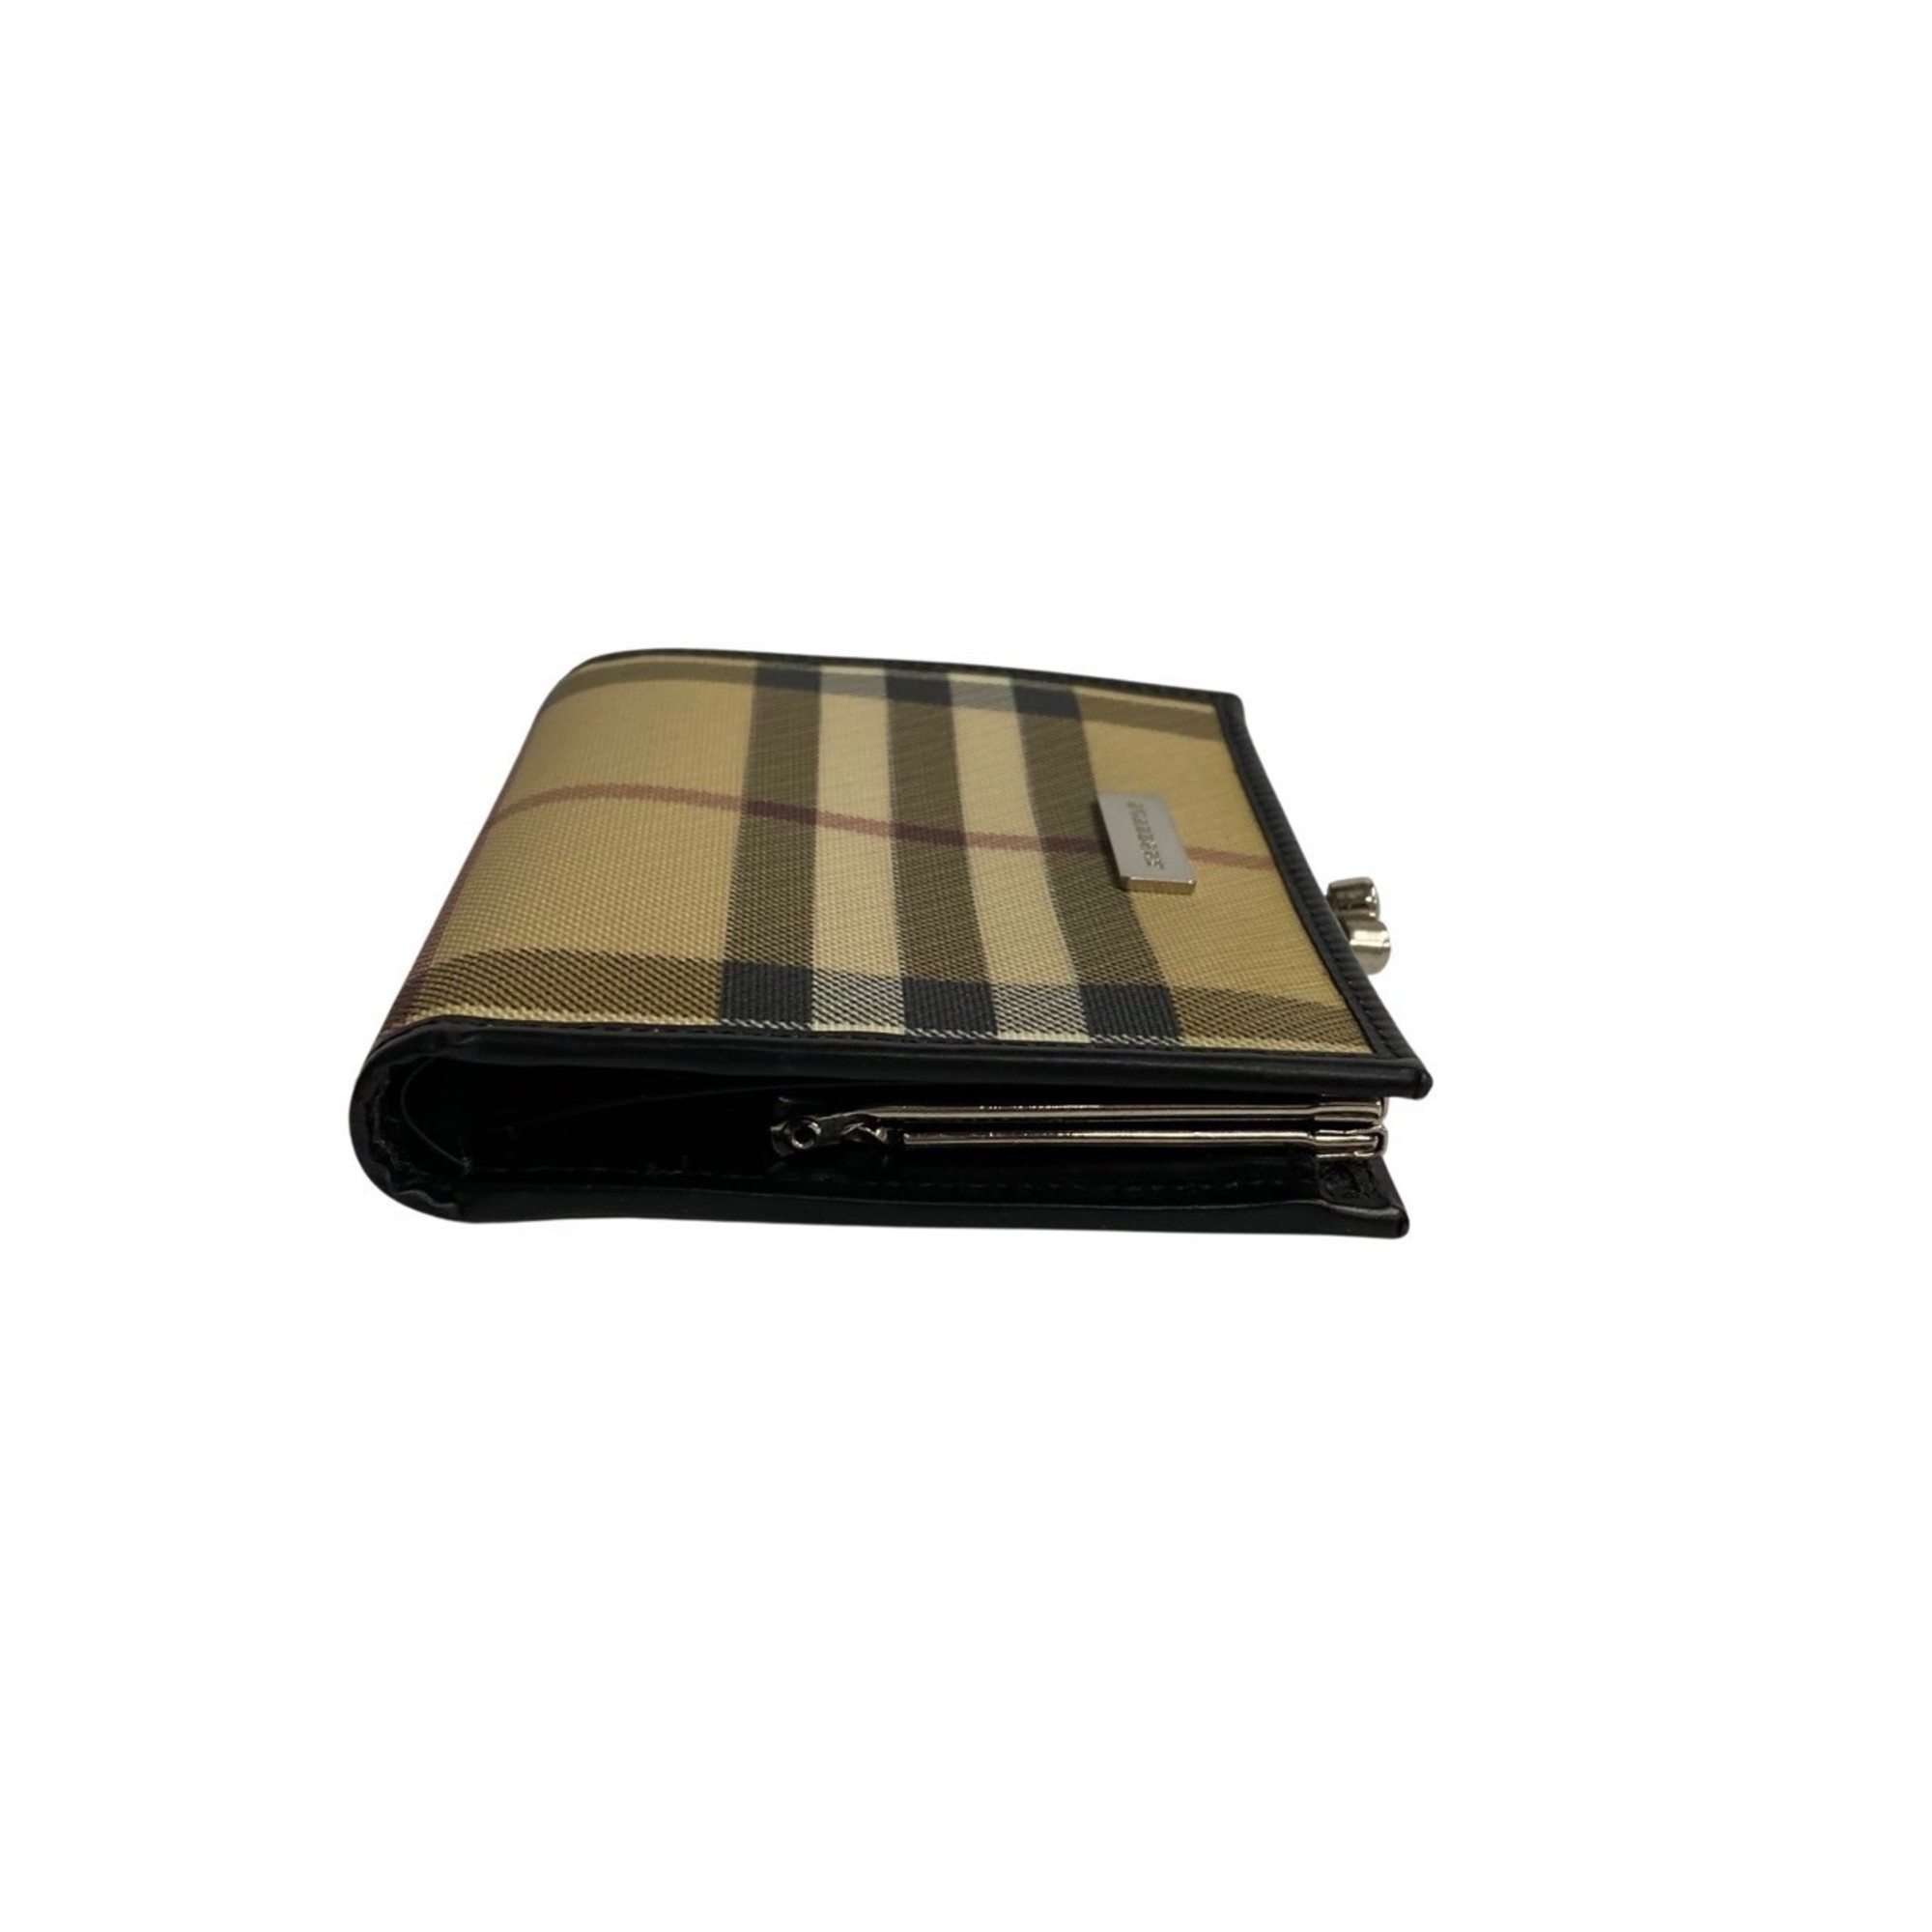 BURBERRY Nova check metal fittings, leather, coin purse, bi-fold wallet, beige, black, 42244